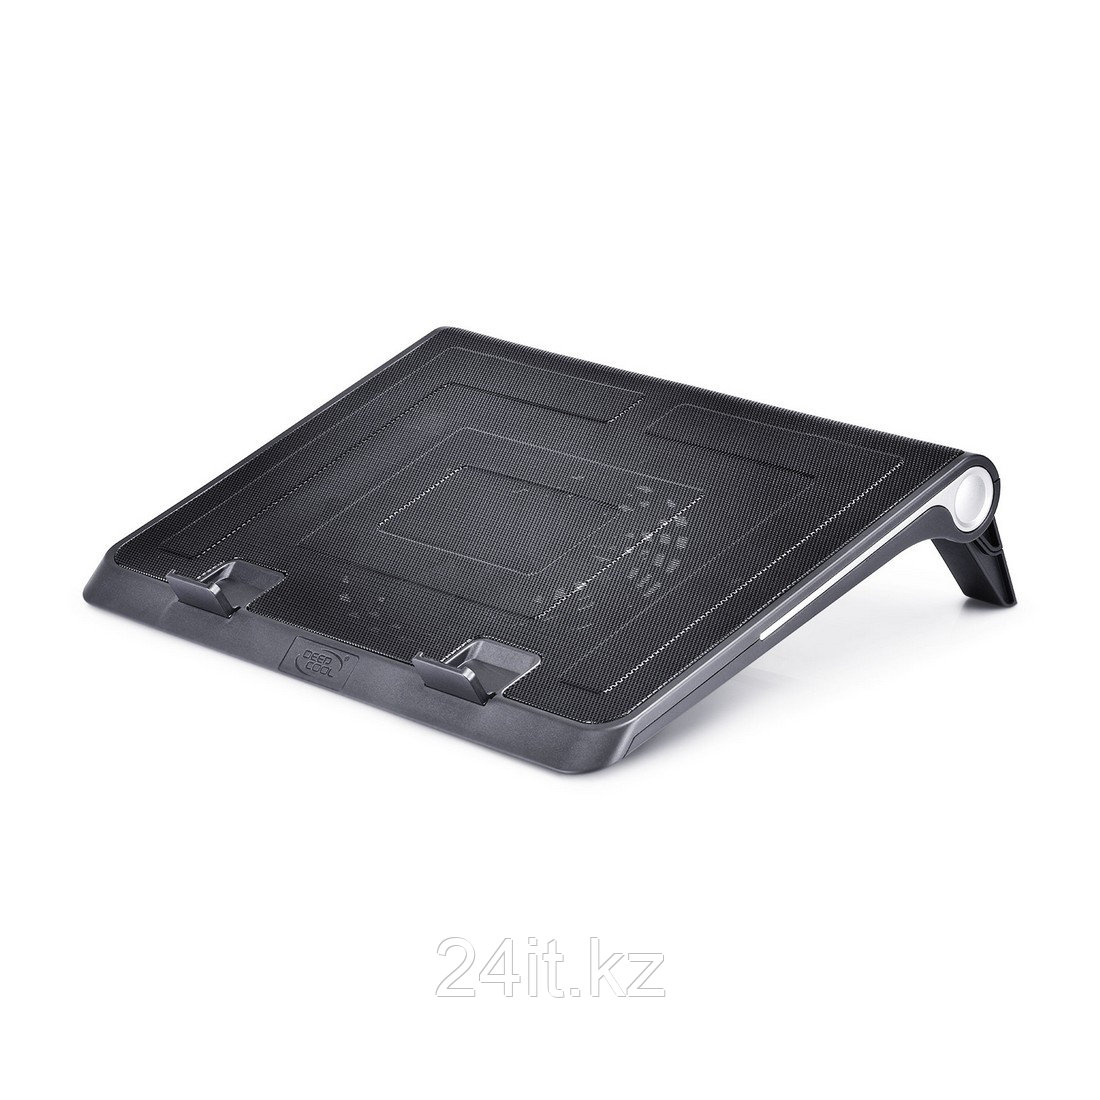 Охлаждающая подставка для ноутбука Deepcool N180 FS 17"